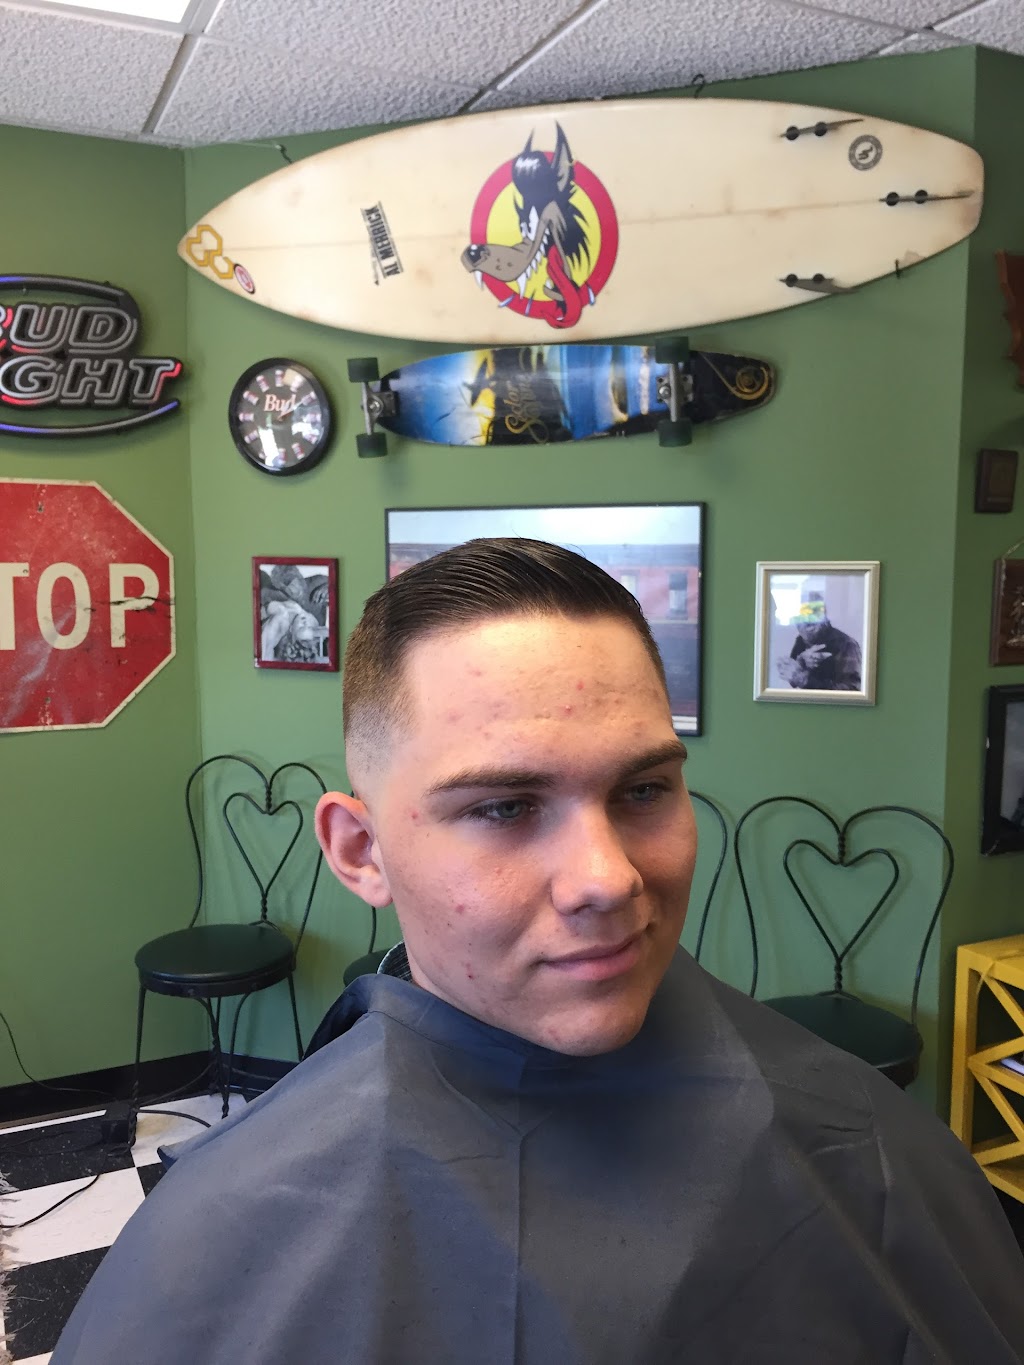 Wolfman Jays barber shop & shave parlor | 521 Main St, Highland Falls, NY 10928 | Phone: (845) 859-4333